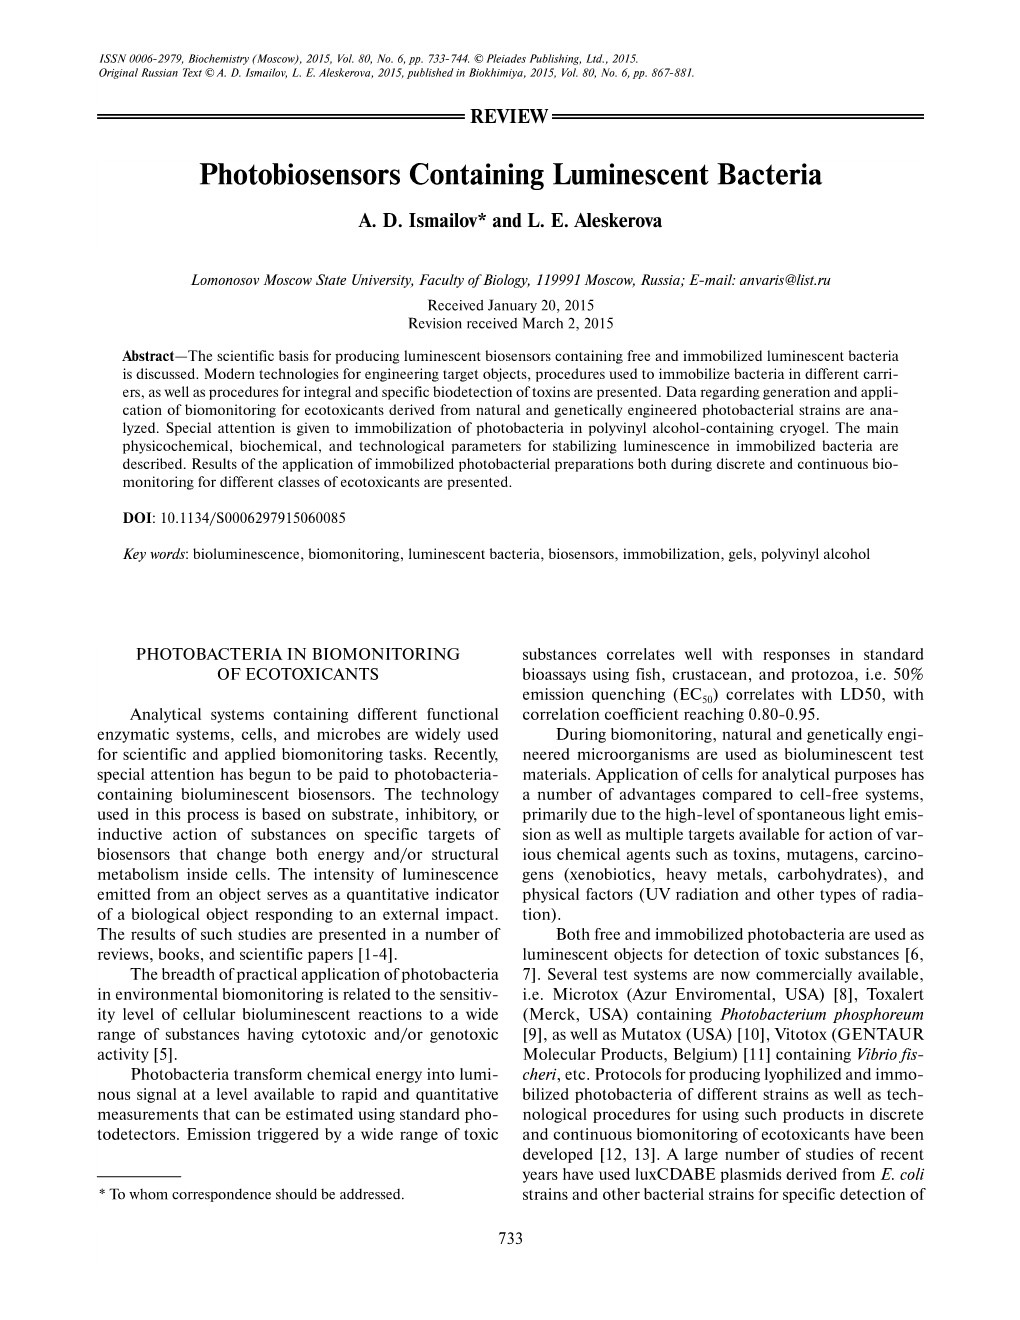 Photobiosensors Containing Luminescent Bacteria